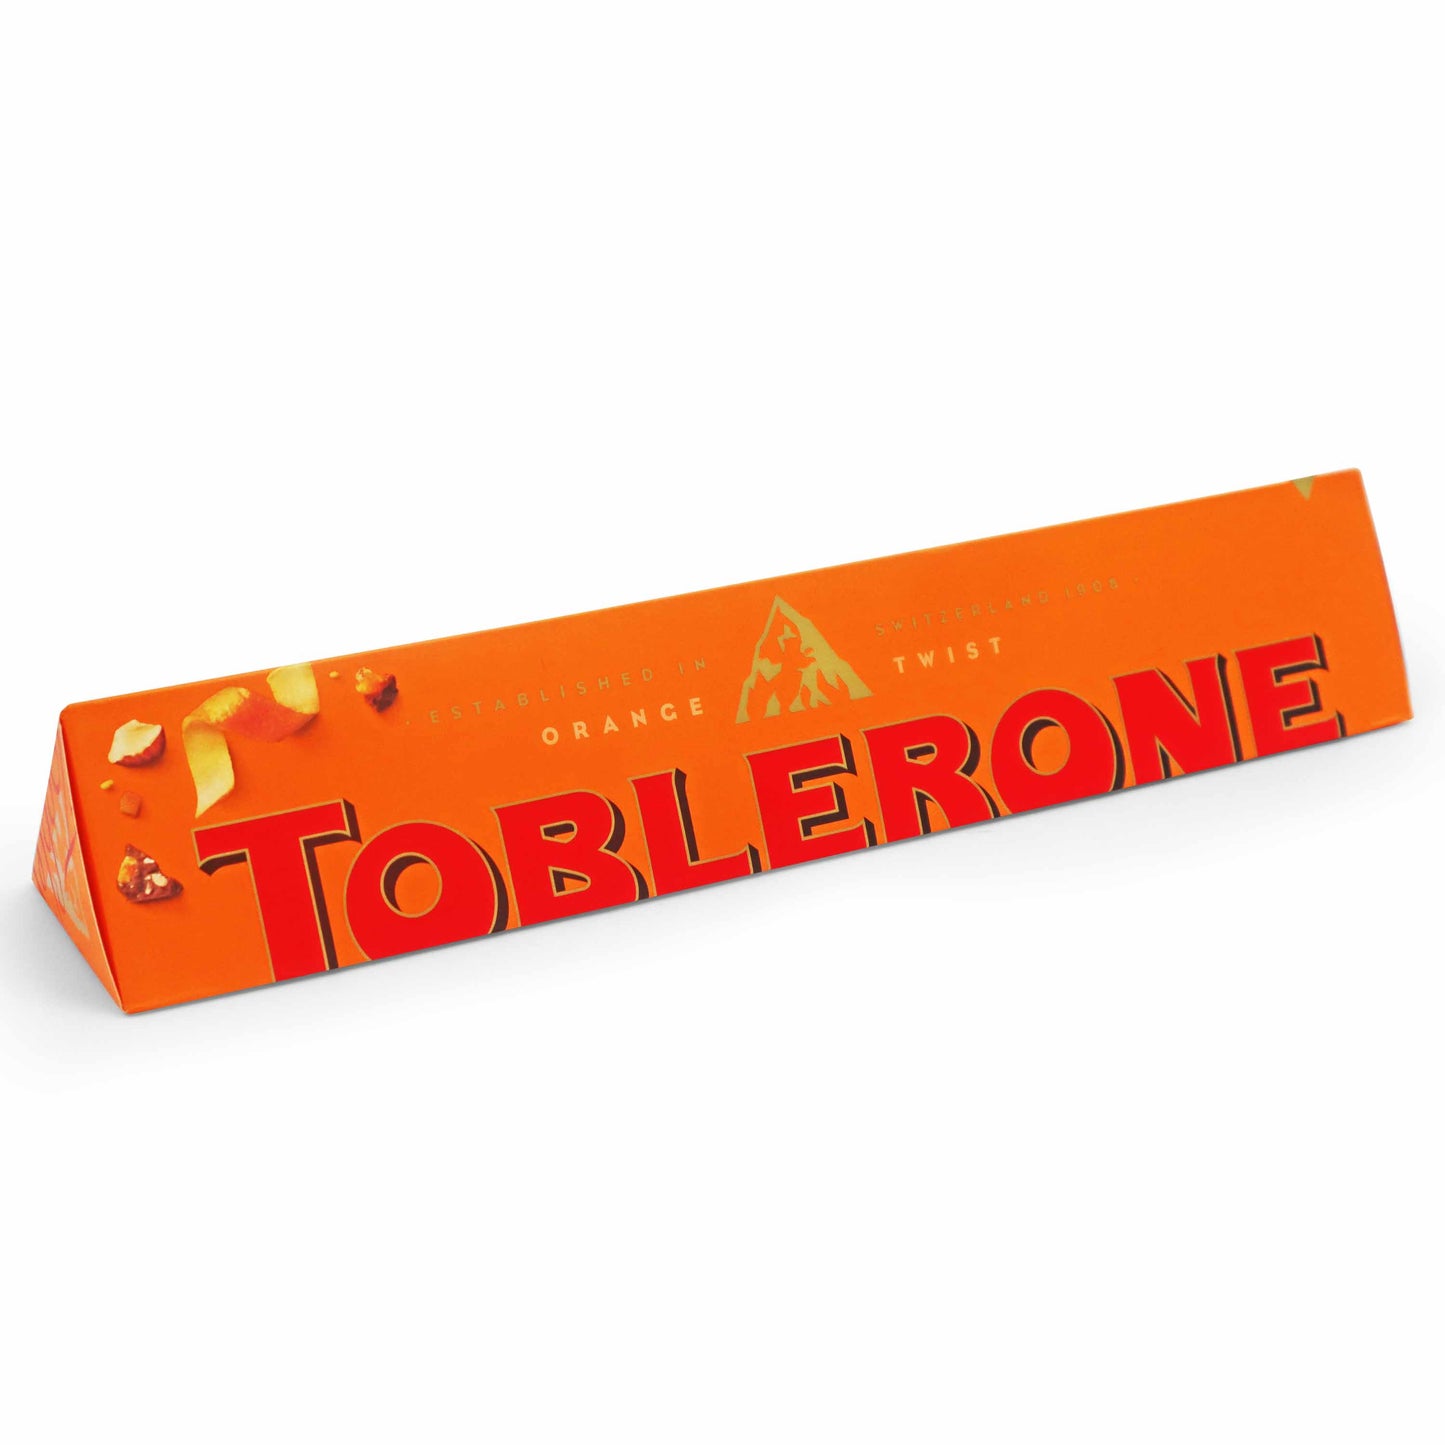 Toblerone Orange Twist Sharing Chocolate Bar - 360g - International Snacks